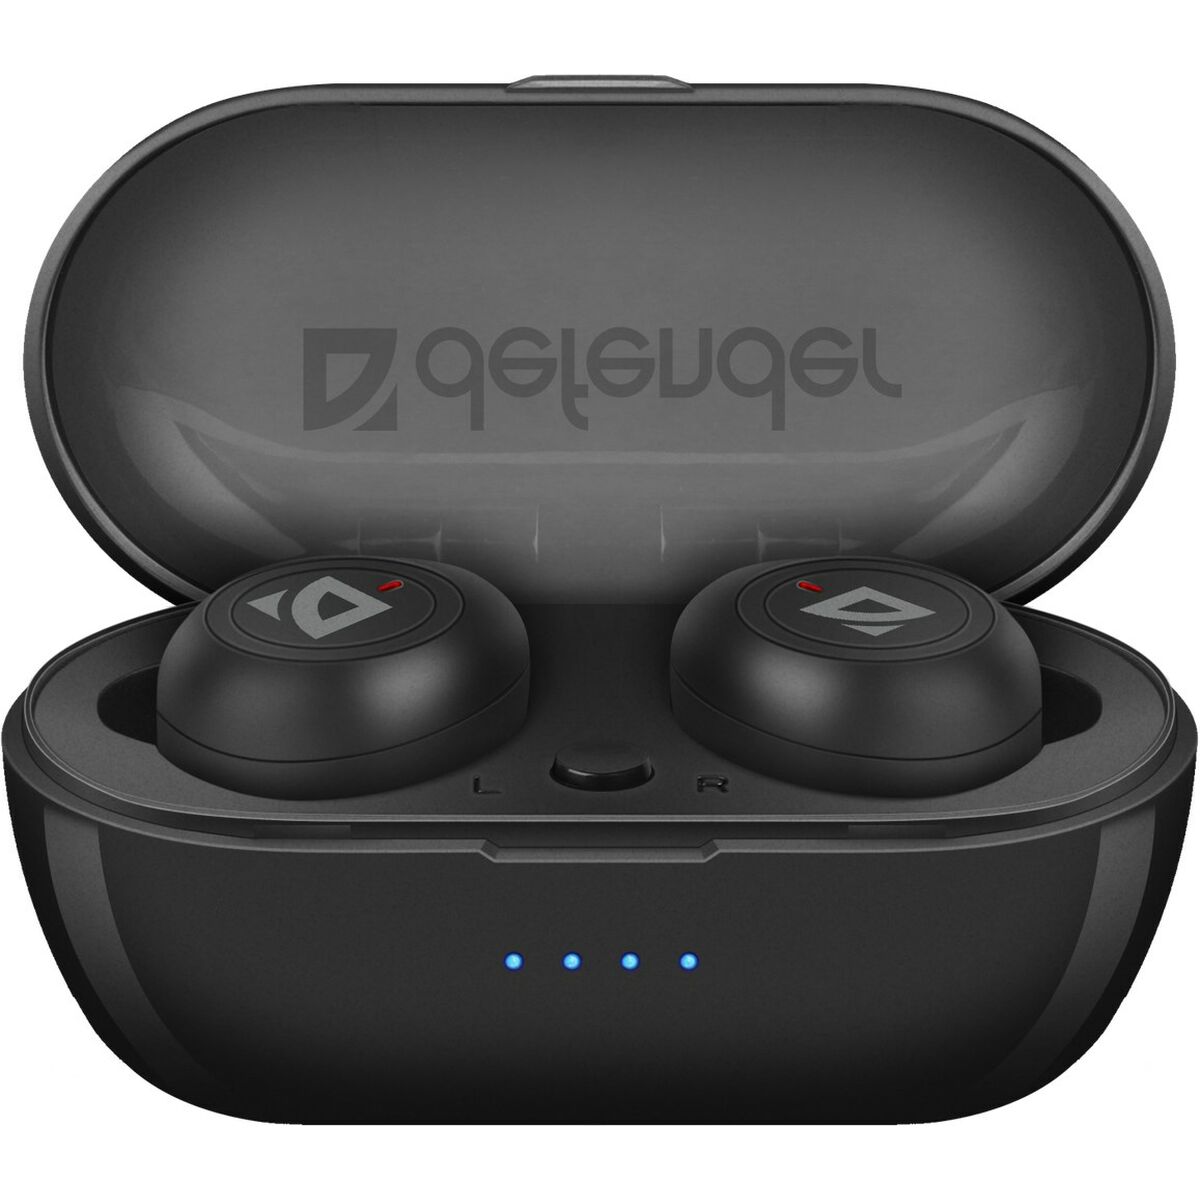 Bluetooth in Ear Headset Defender Twins 638 Schwarz - CA International  